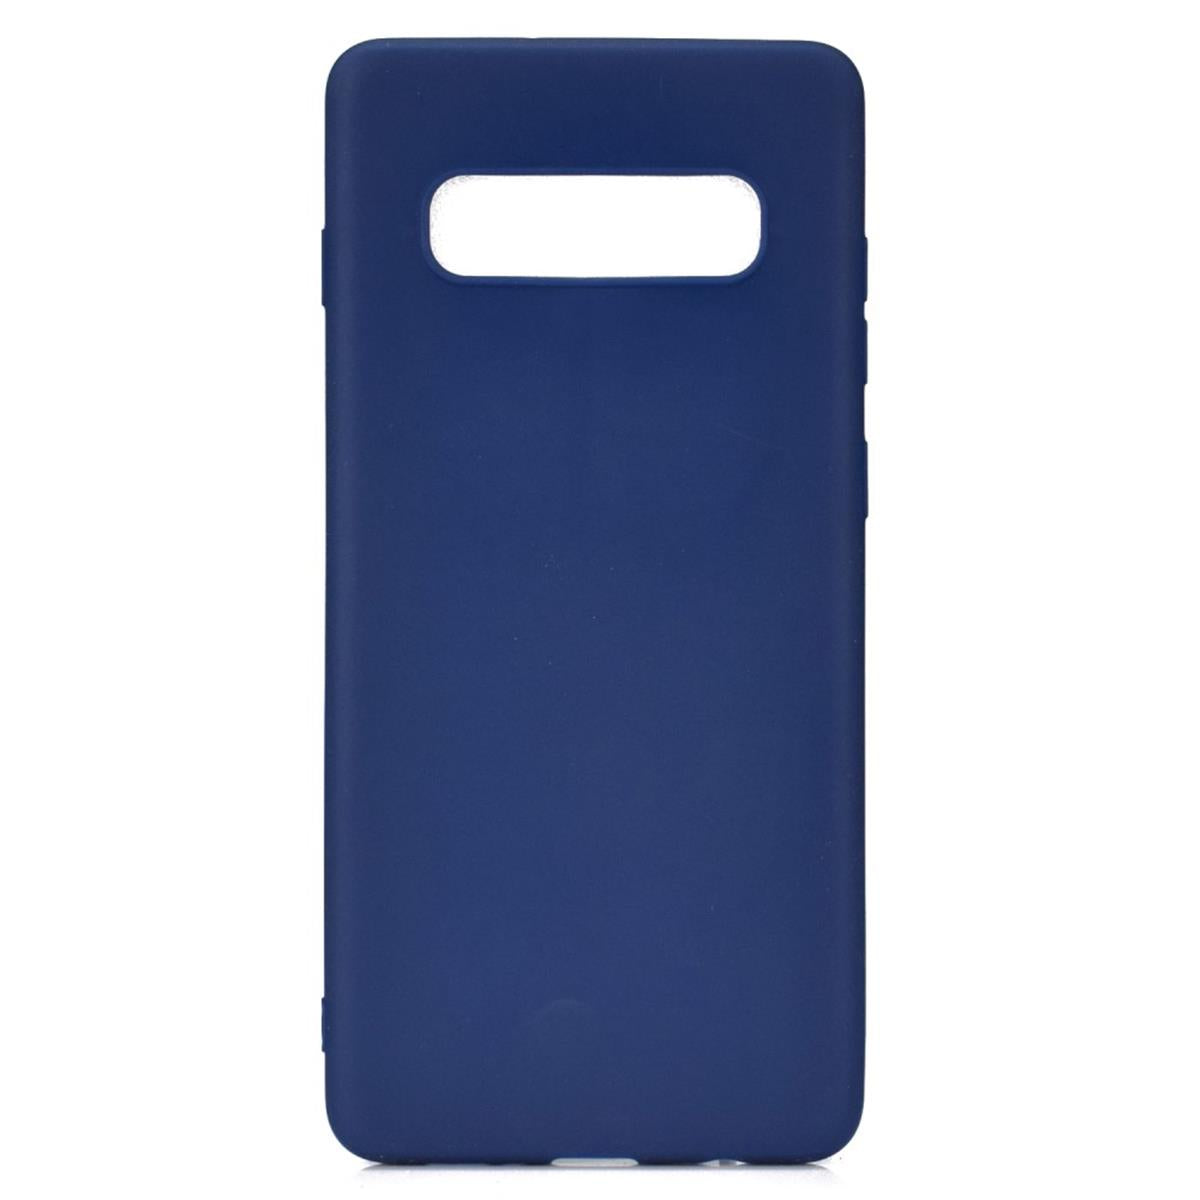 Hülle für Samsung Galaxy S10+ (Plus) Handyhülle Silikon Case Cover Matt Blau